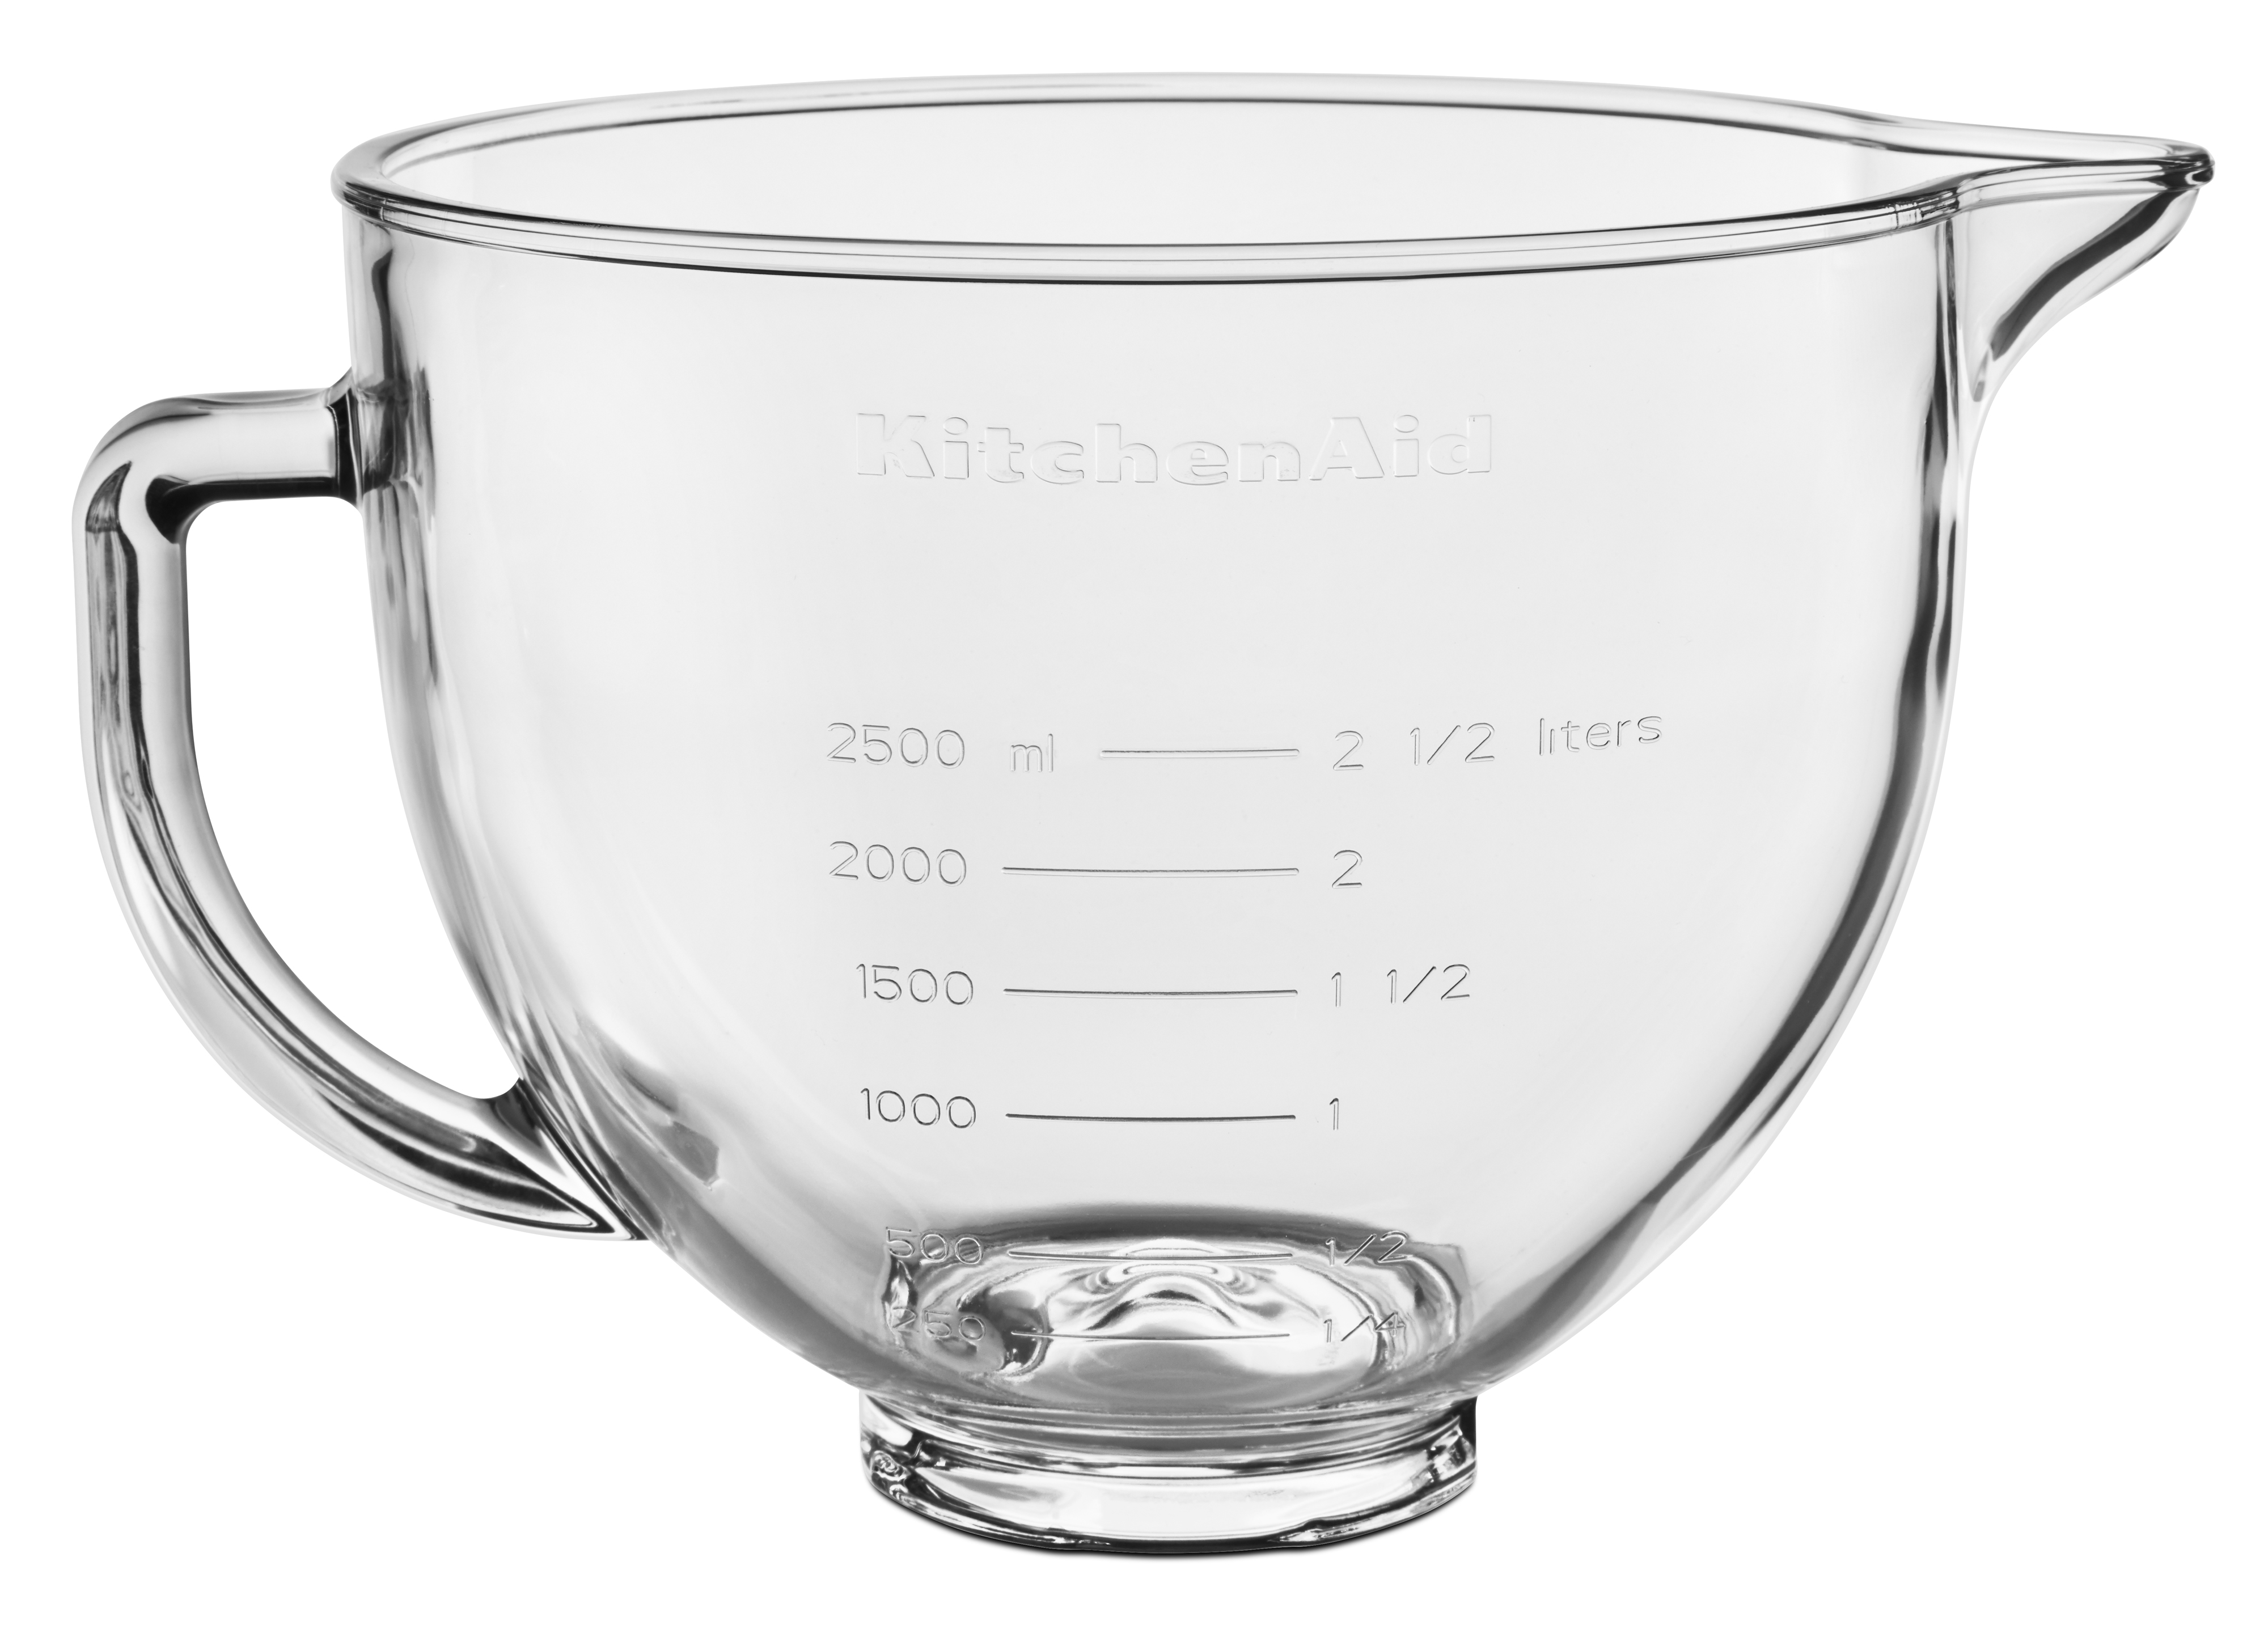 KitchenAid 5 Quart Tilt-Head Glass Bowl with Measurement Markings, Clear, KSM5NLGB - image 2 of 5